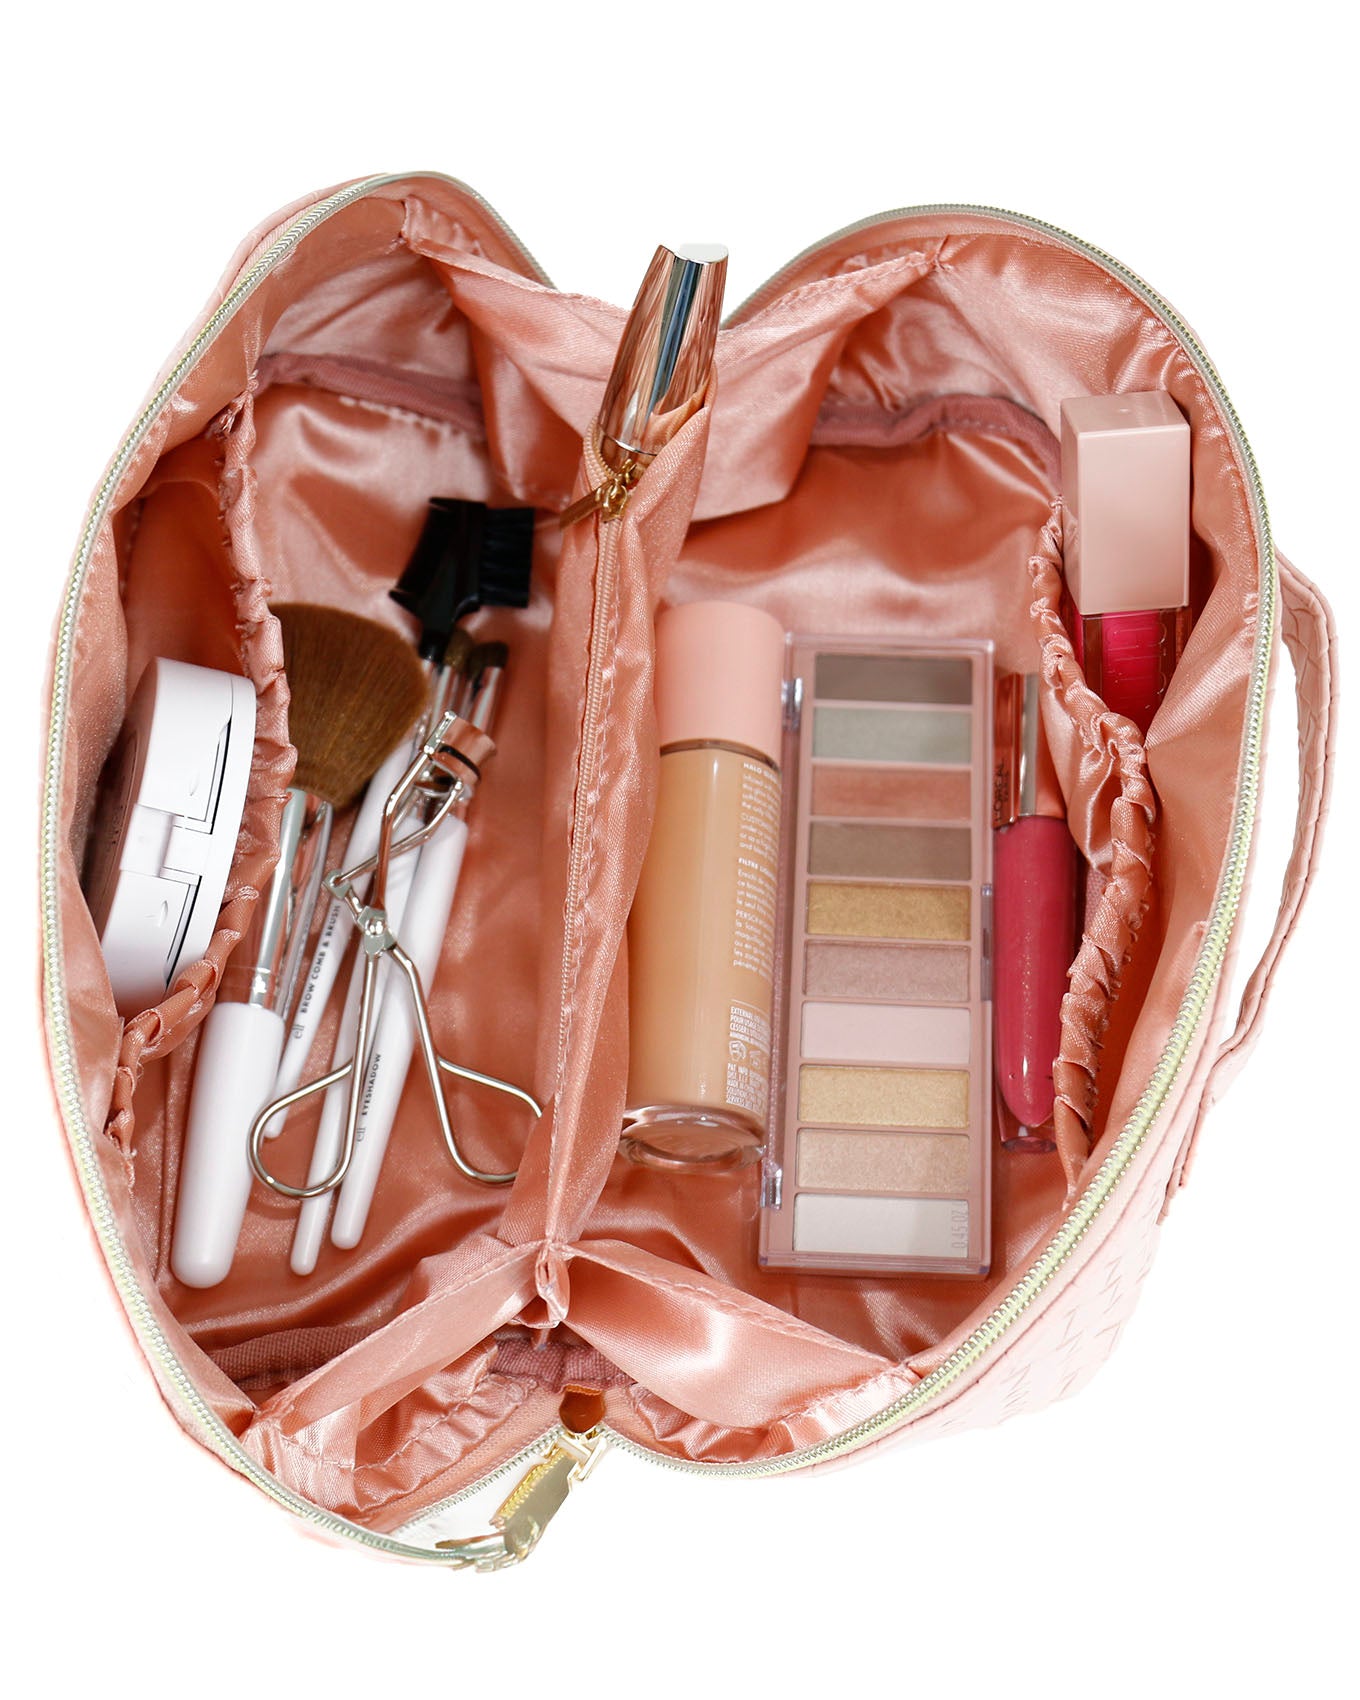 Interior view of Blush Makeup Bag